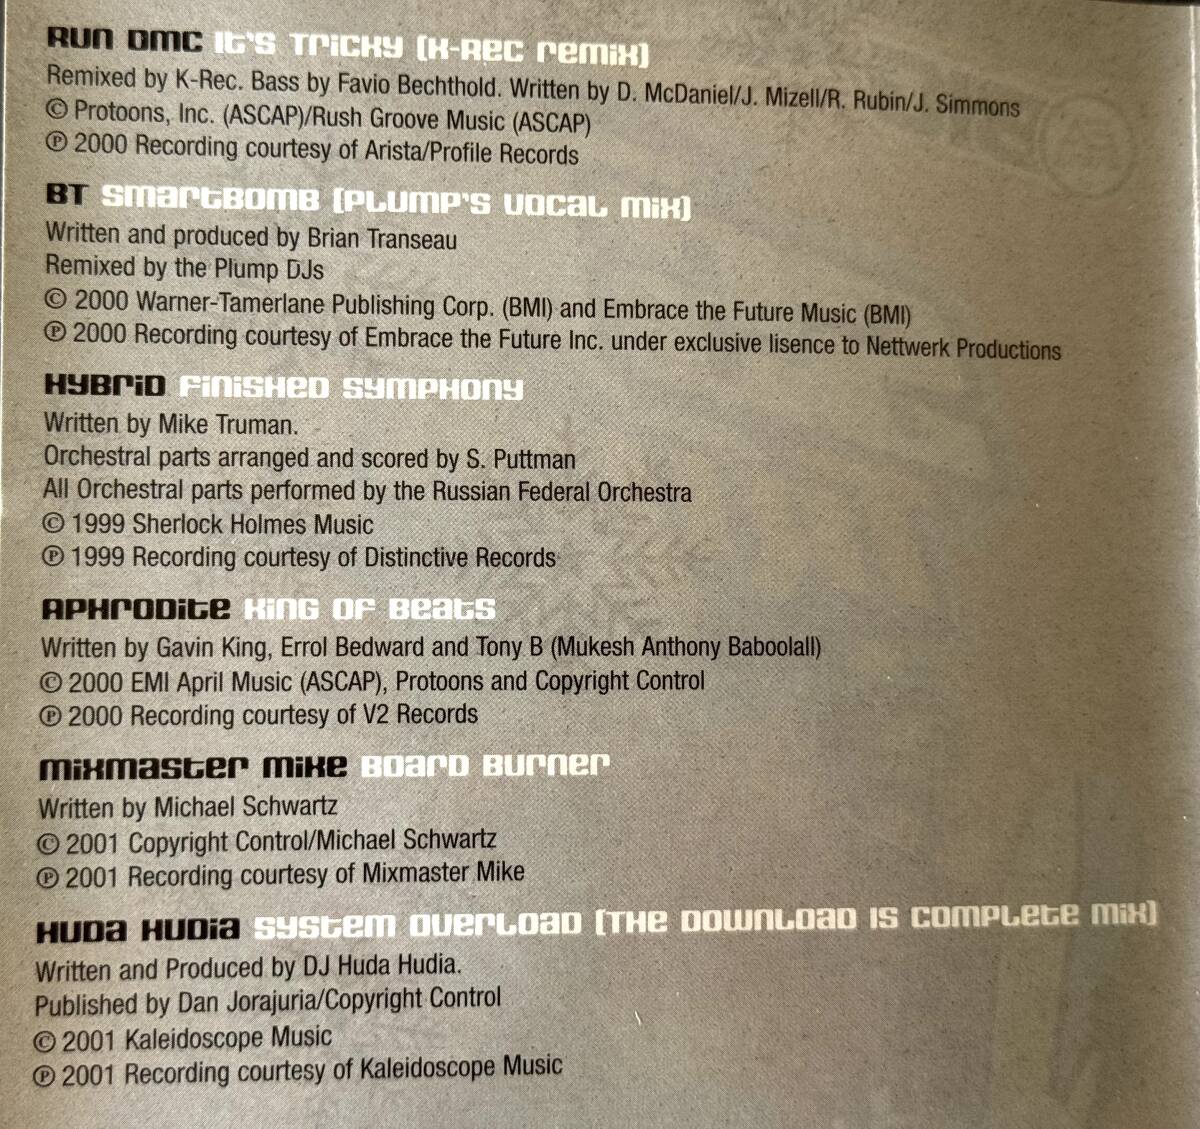 SSX TRICKY SSX トリッキー Music CD 超レア盤 RUN DMC など全12曲収録 美品の画像4